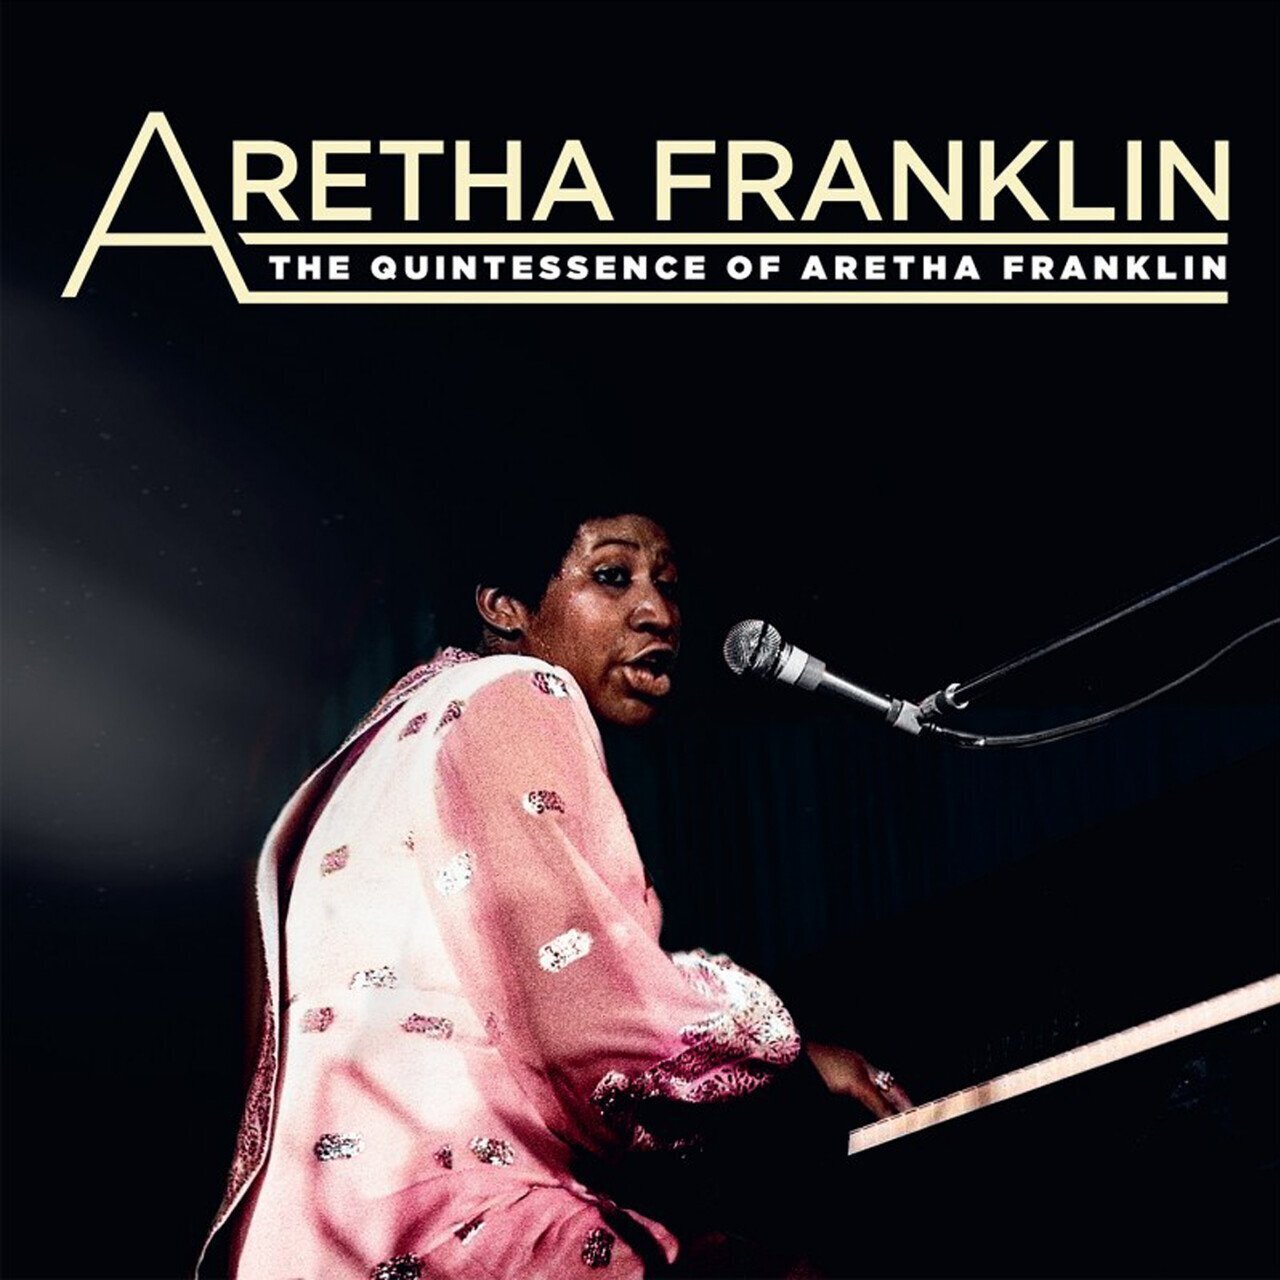 The Quintessence of Aretha Franklin